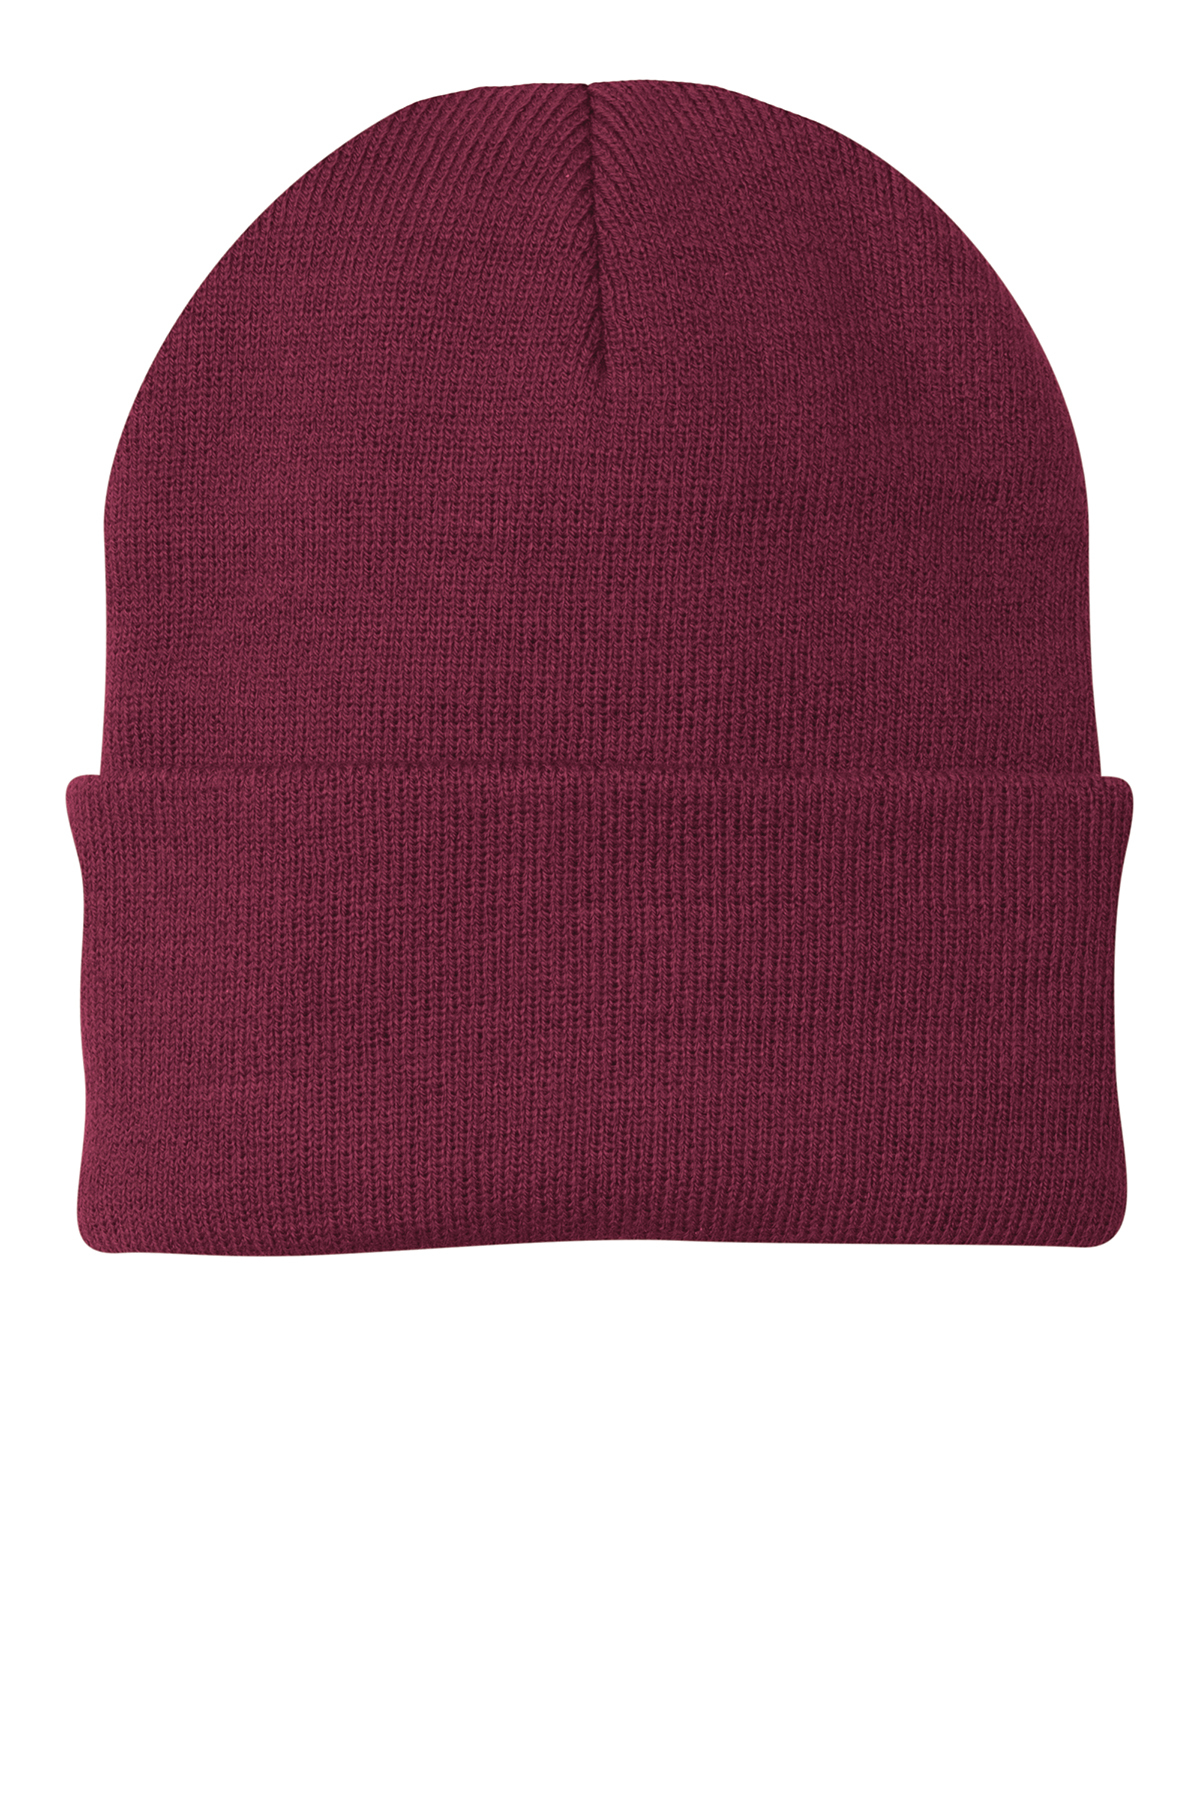 Port & Company - Knit Cap | Product | Company Casuals